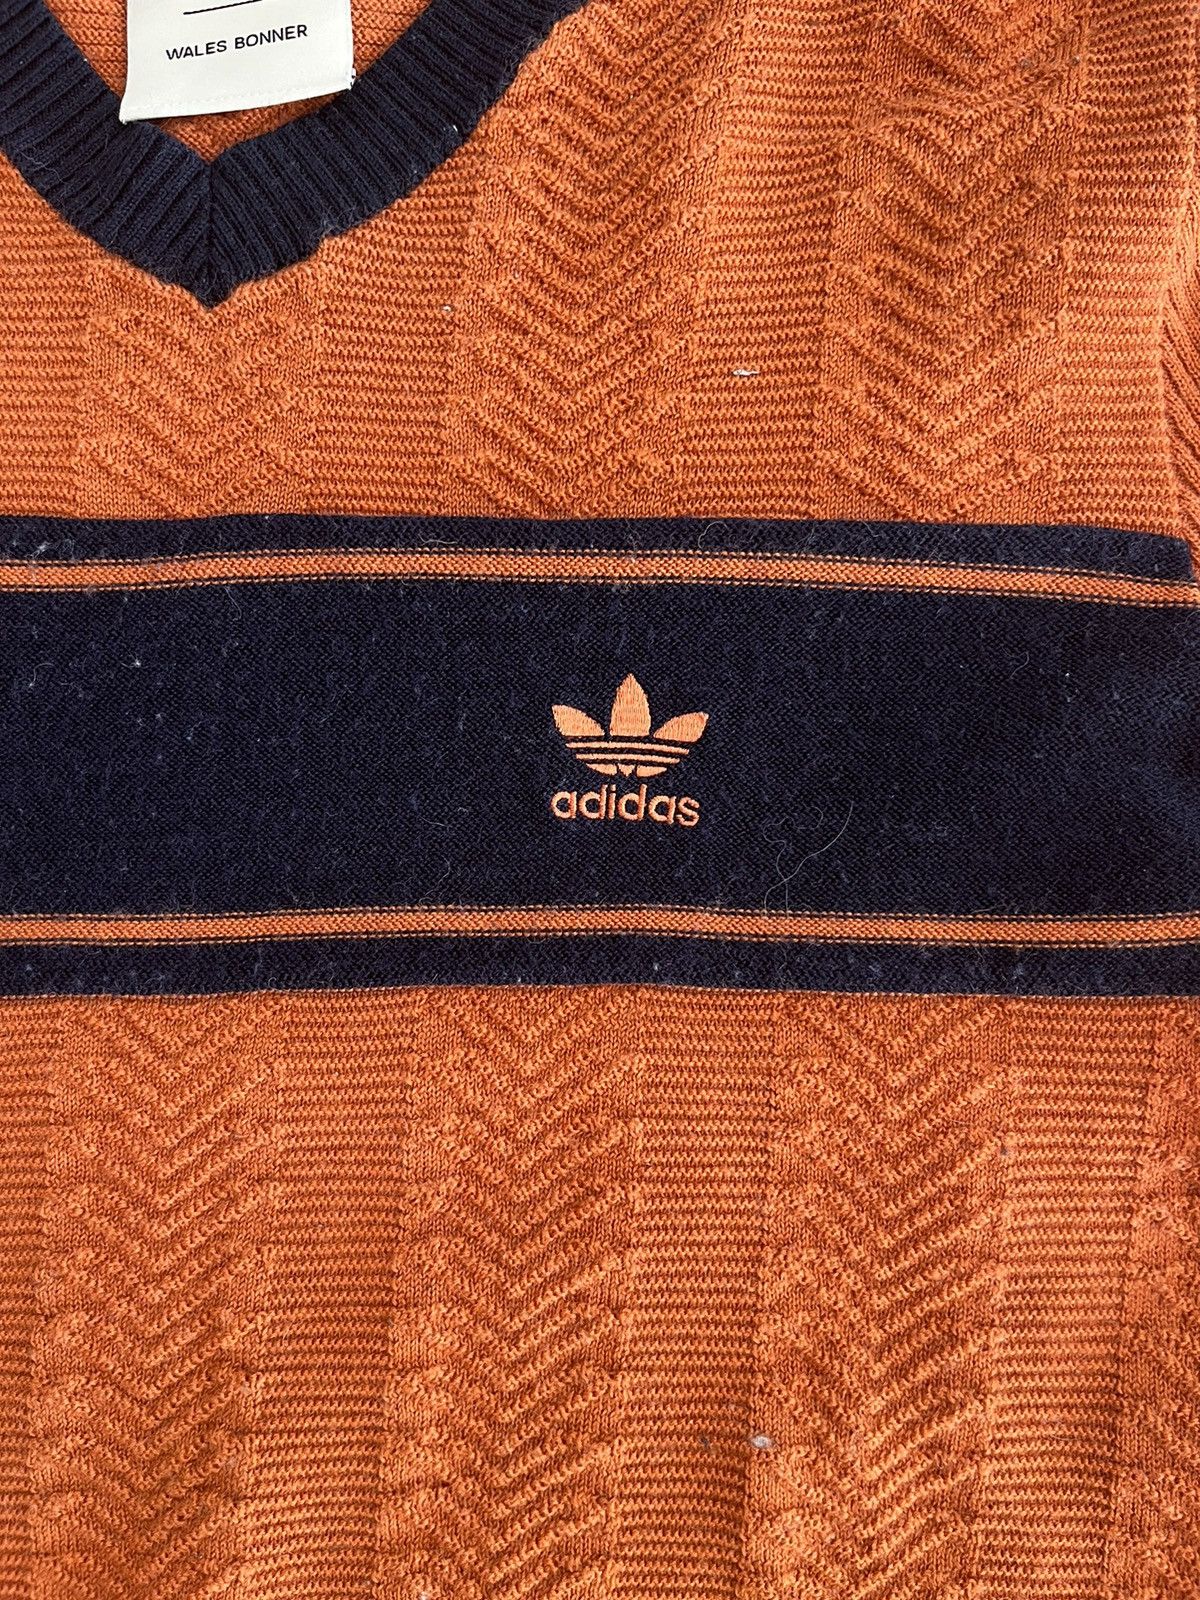 Wales Bonner x Adidas Knit Sweater - 3